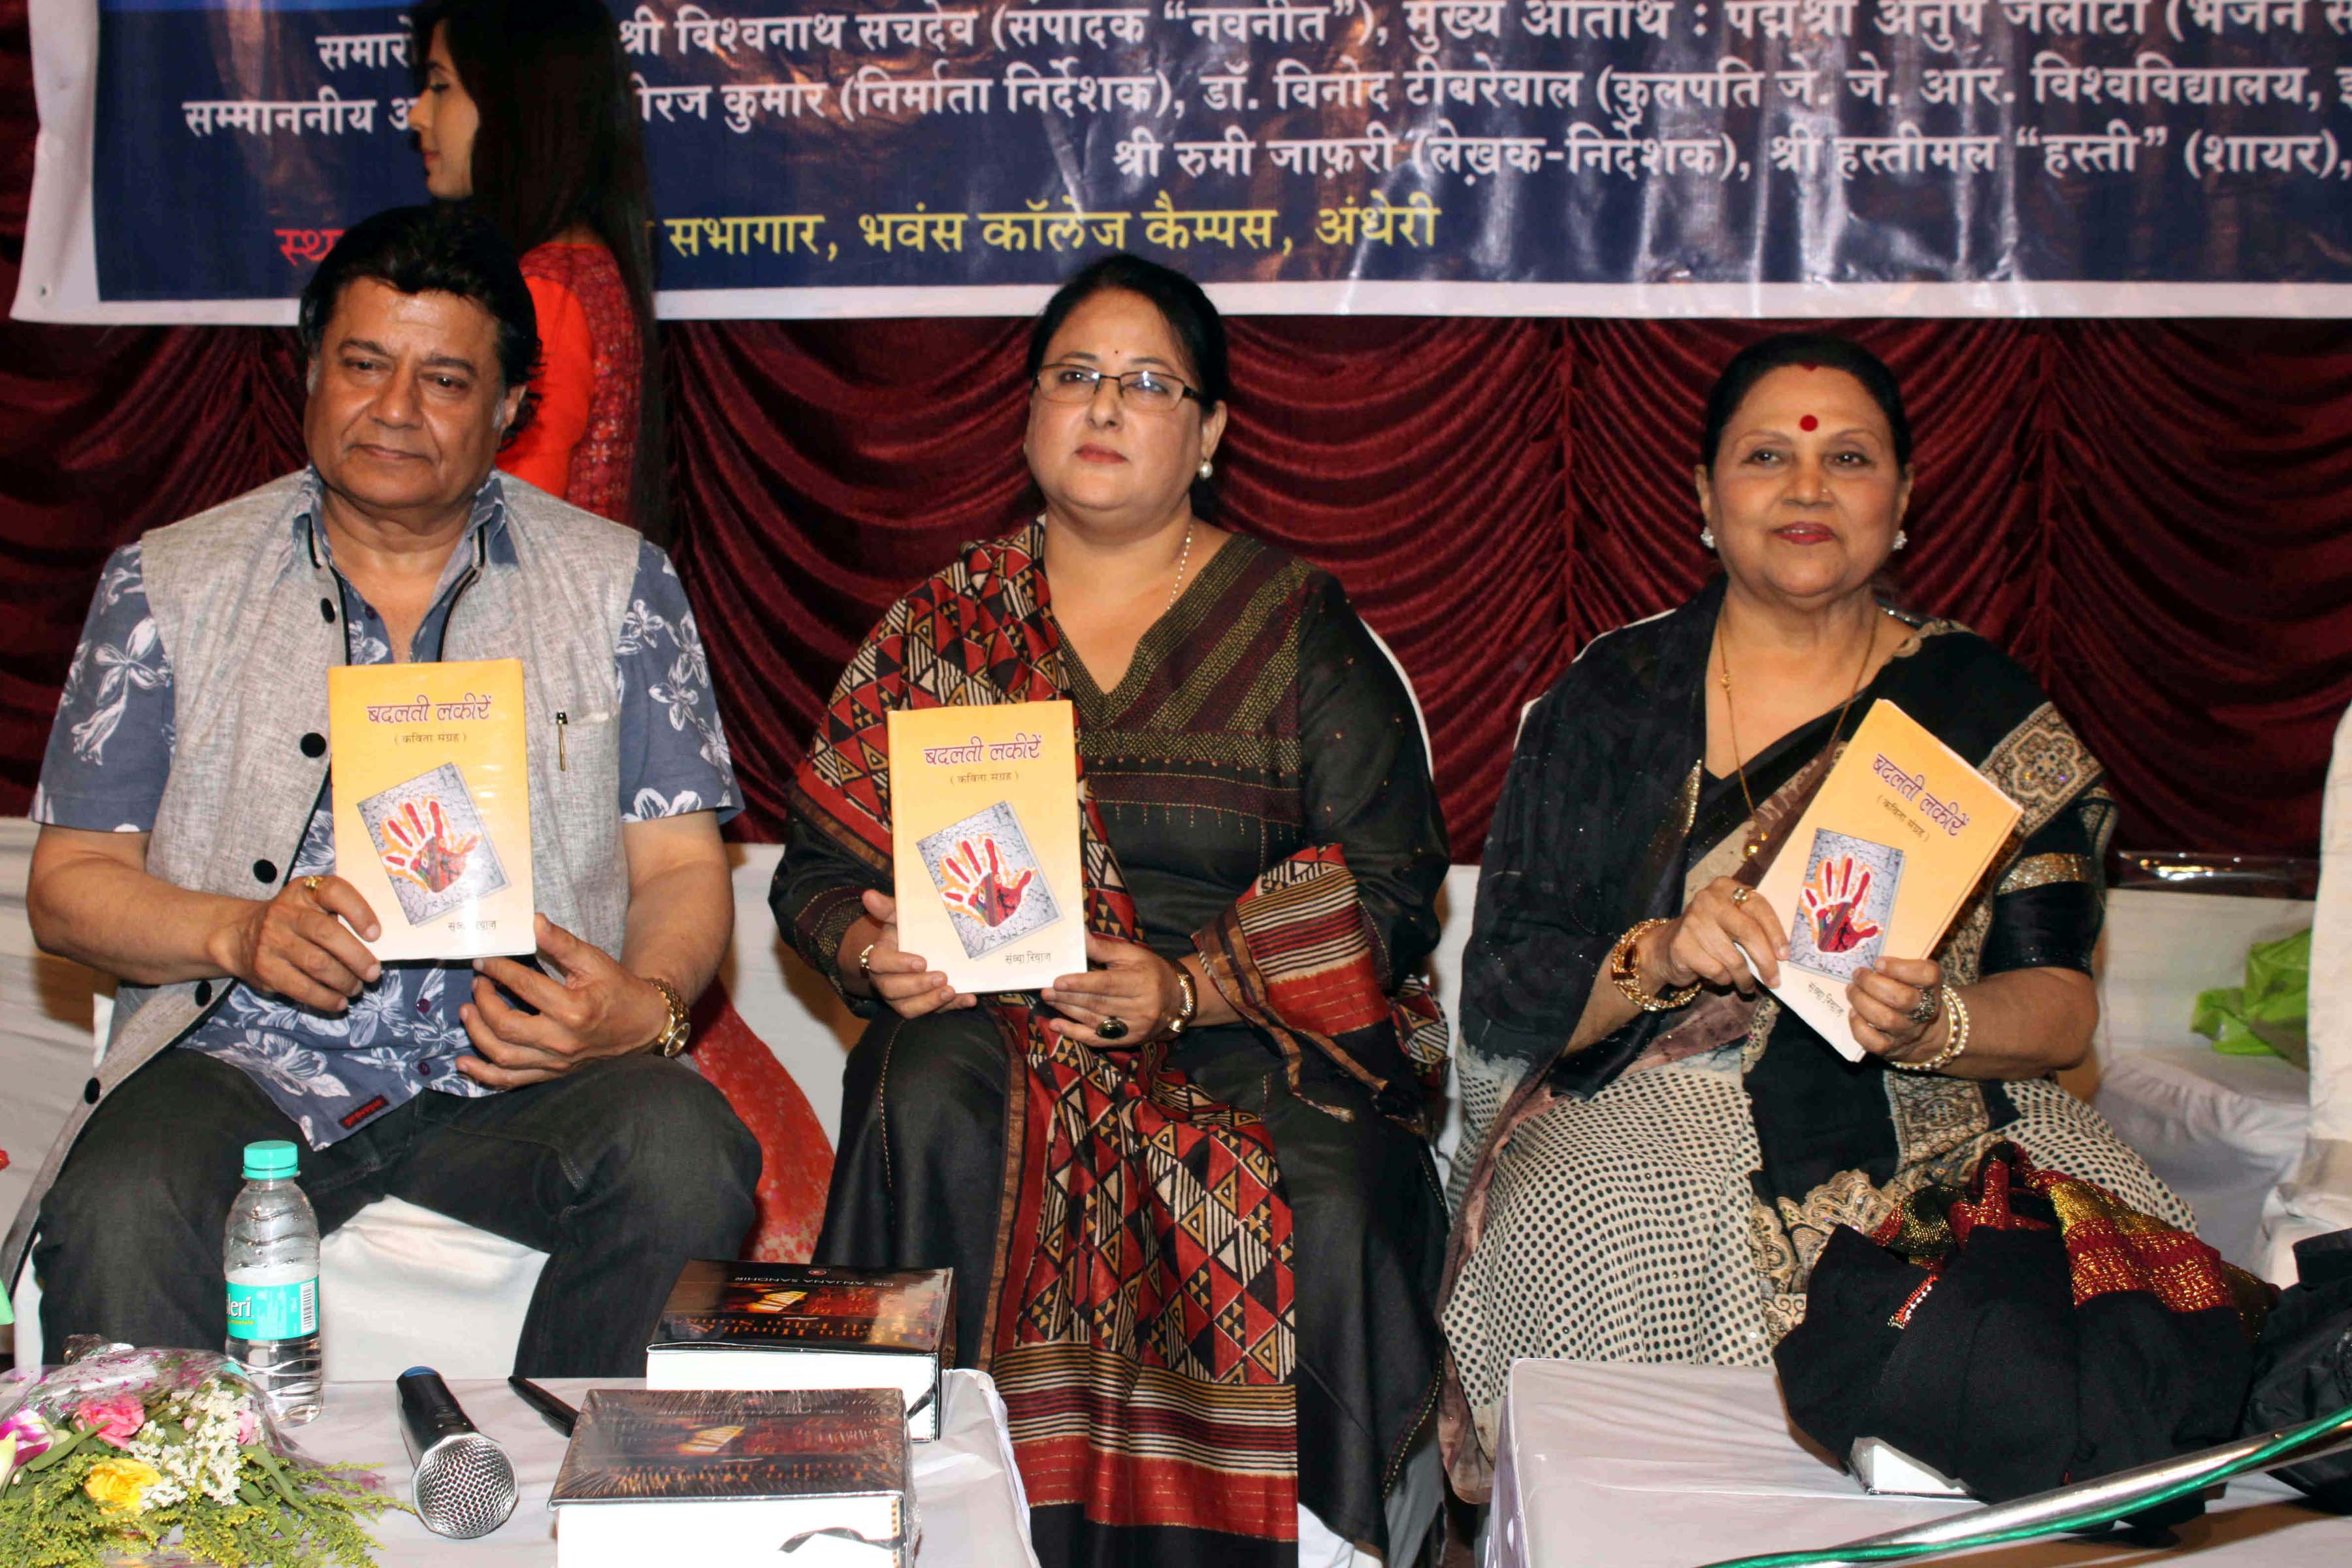 Launched poetry book Badalti Lakiren 